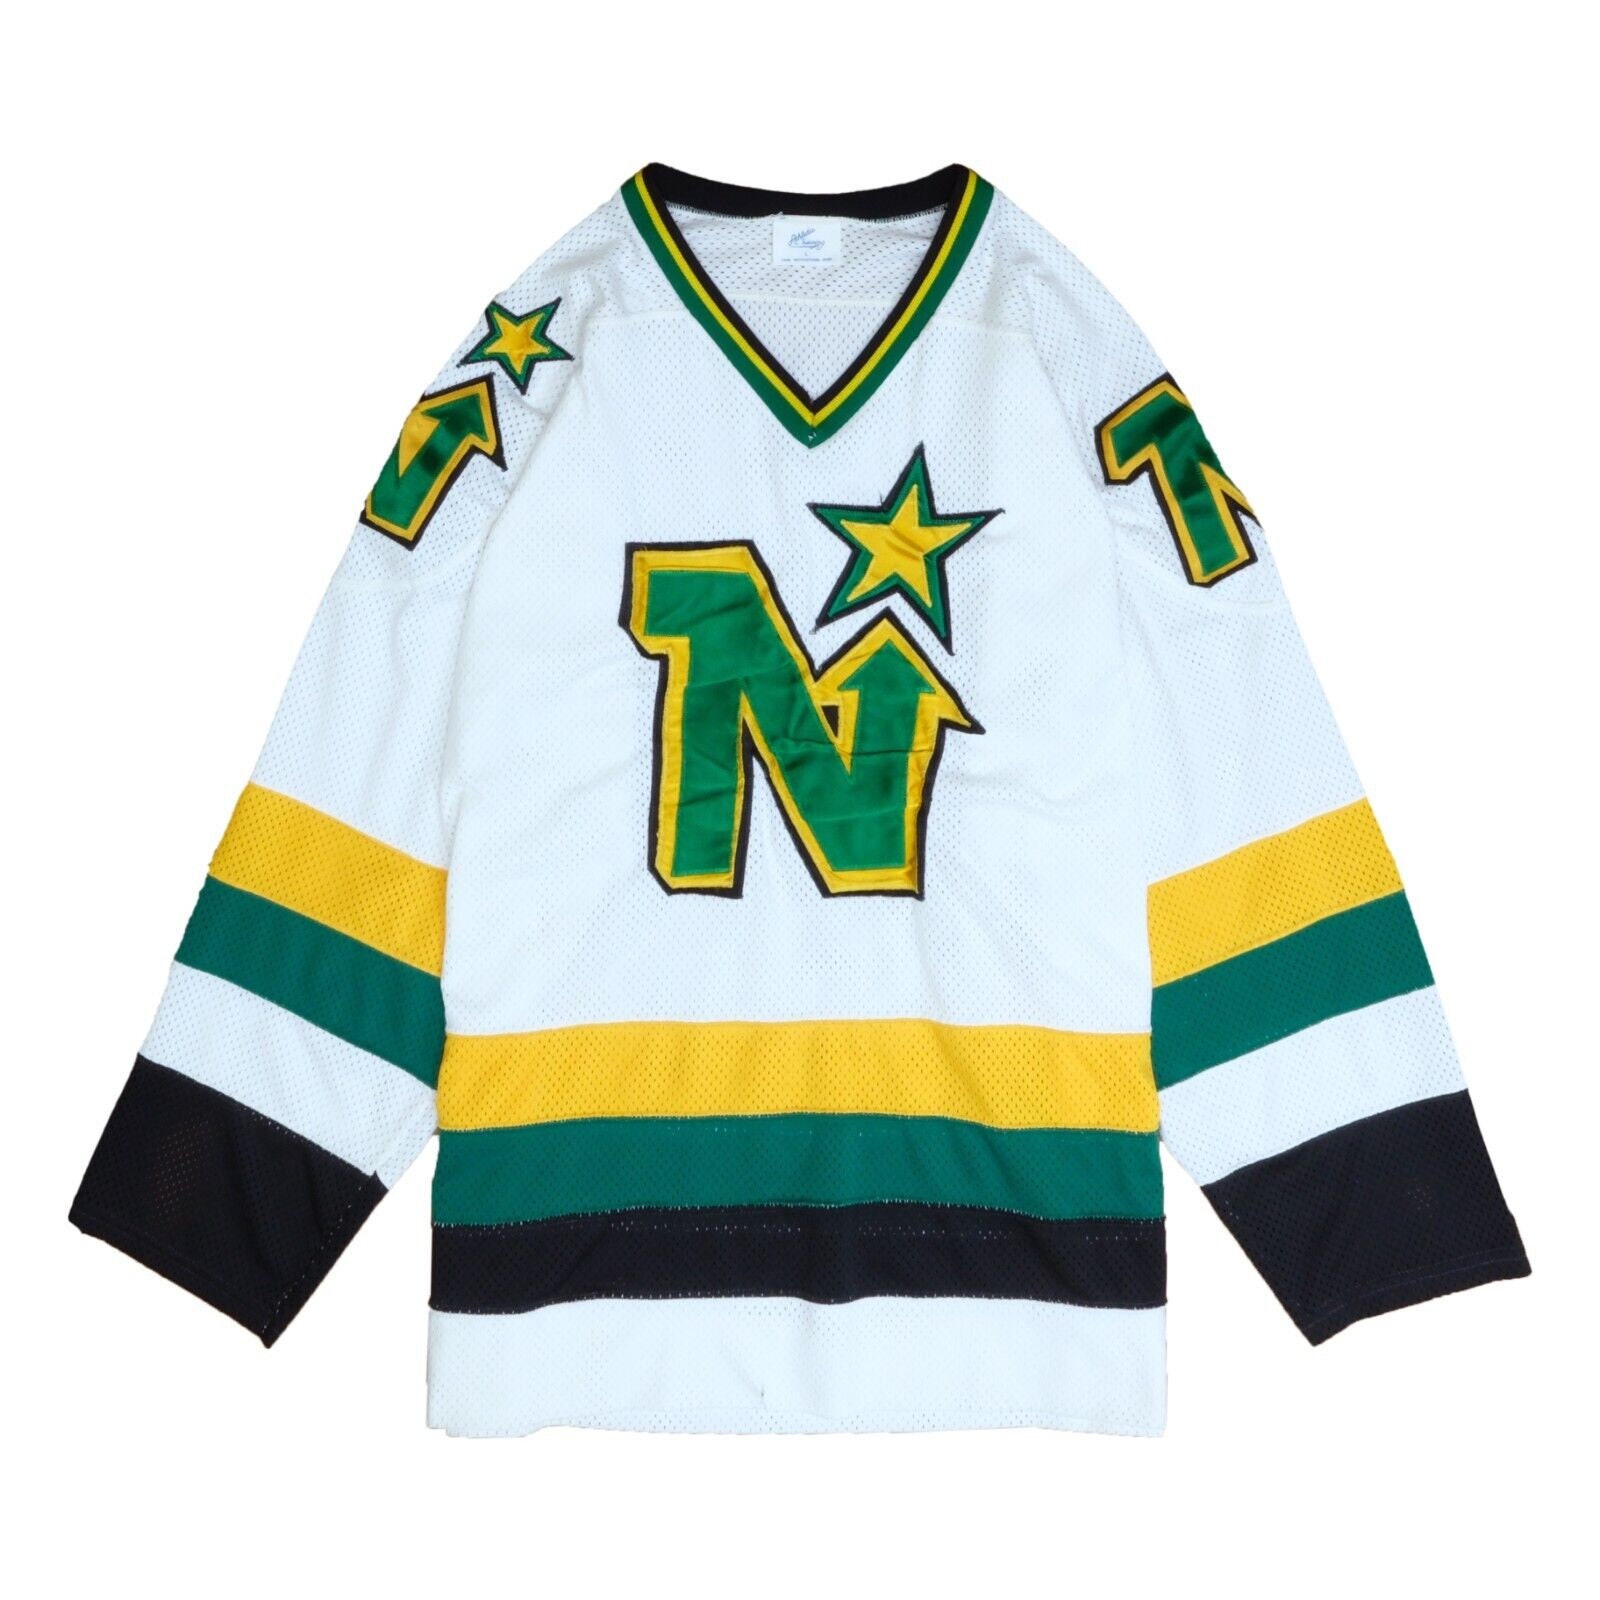 Minnesota North Stars Gear, North Stars Jerseys, Minnesota North Stars  Clothing, North Stars Pro Shop, Hockey Apparel